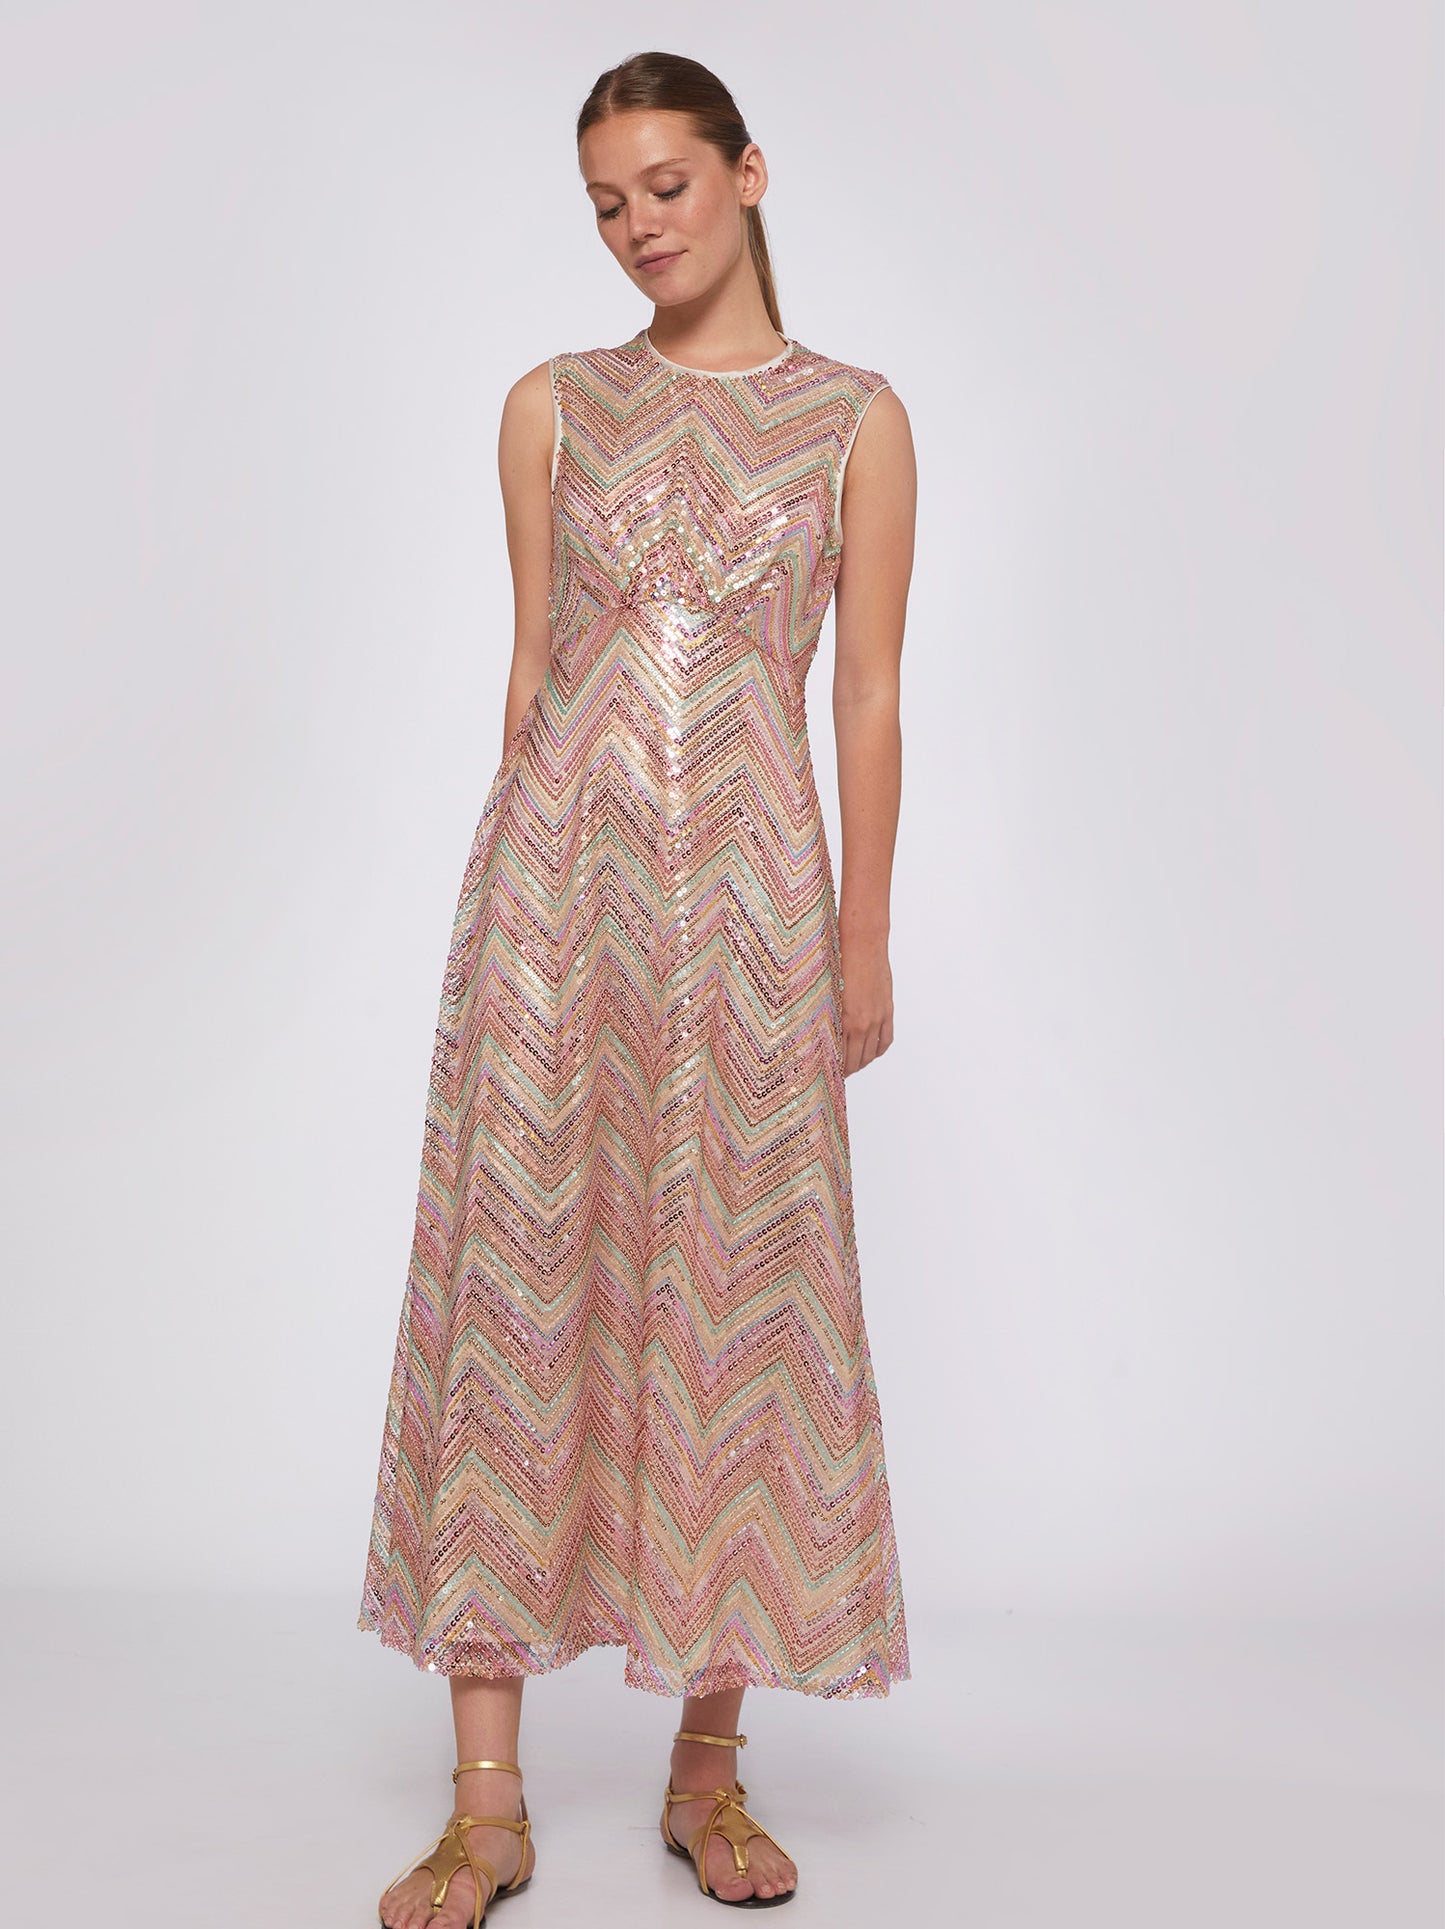 Sequin Pattern Dress